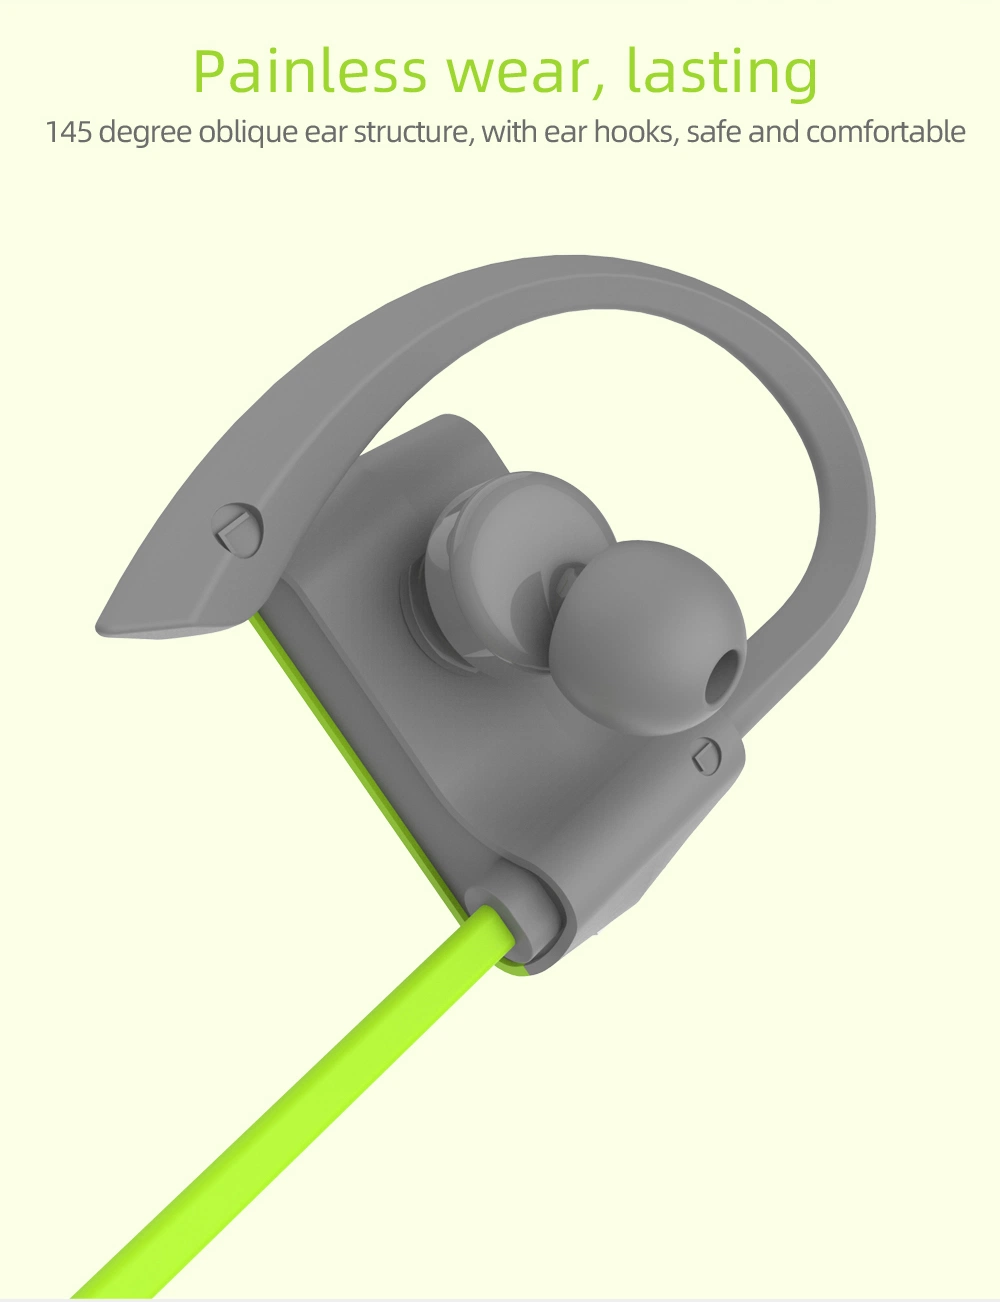 Free Sample Wired Earphones Waterproof Function in Ear Sport Earbuds